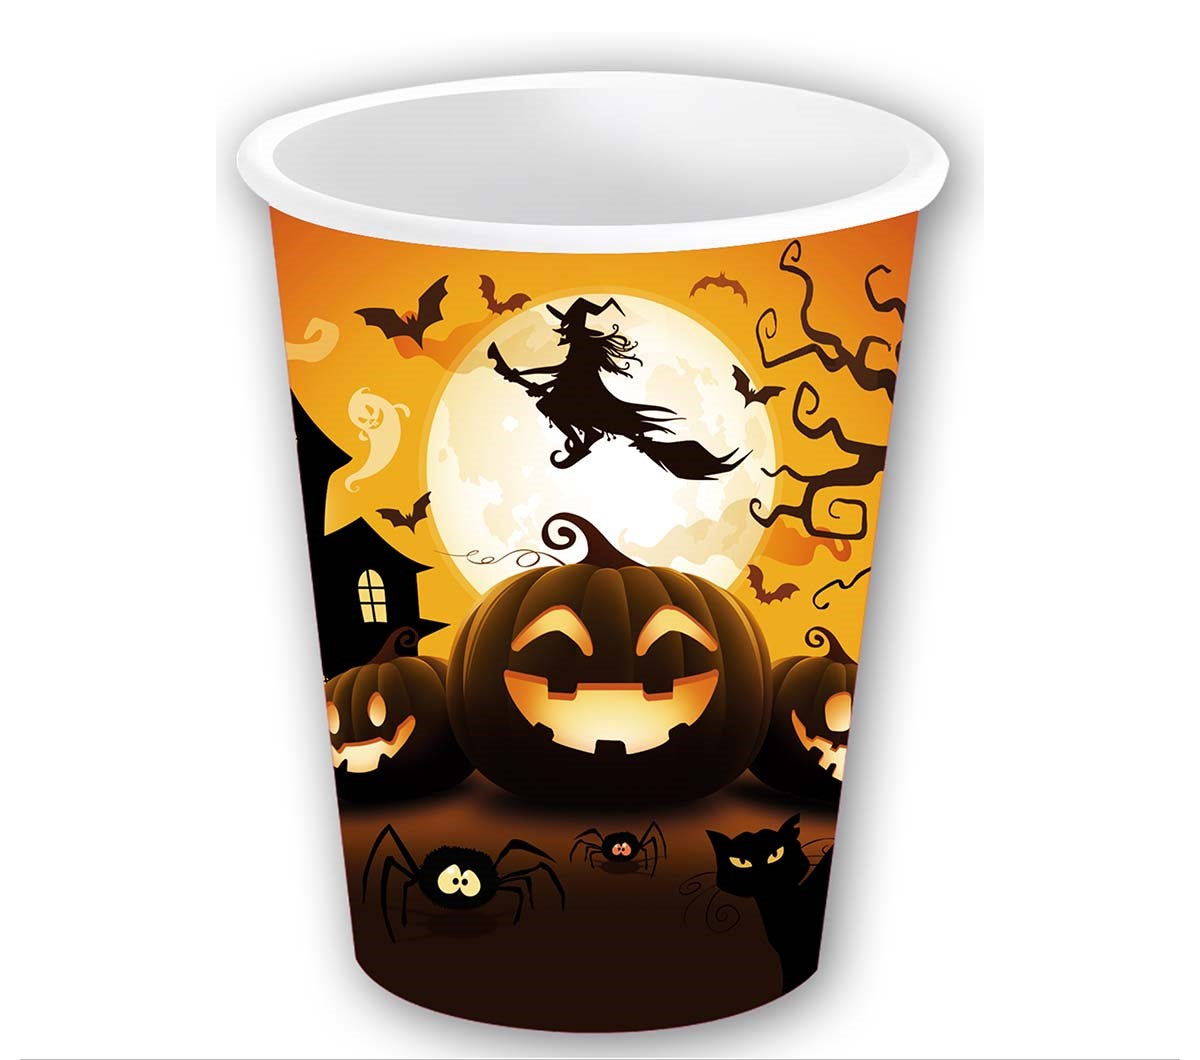 Spooky Pumpkin Cups Halloween Tableware